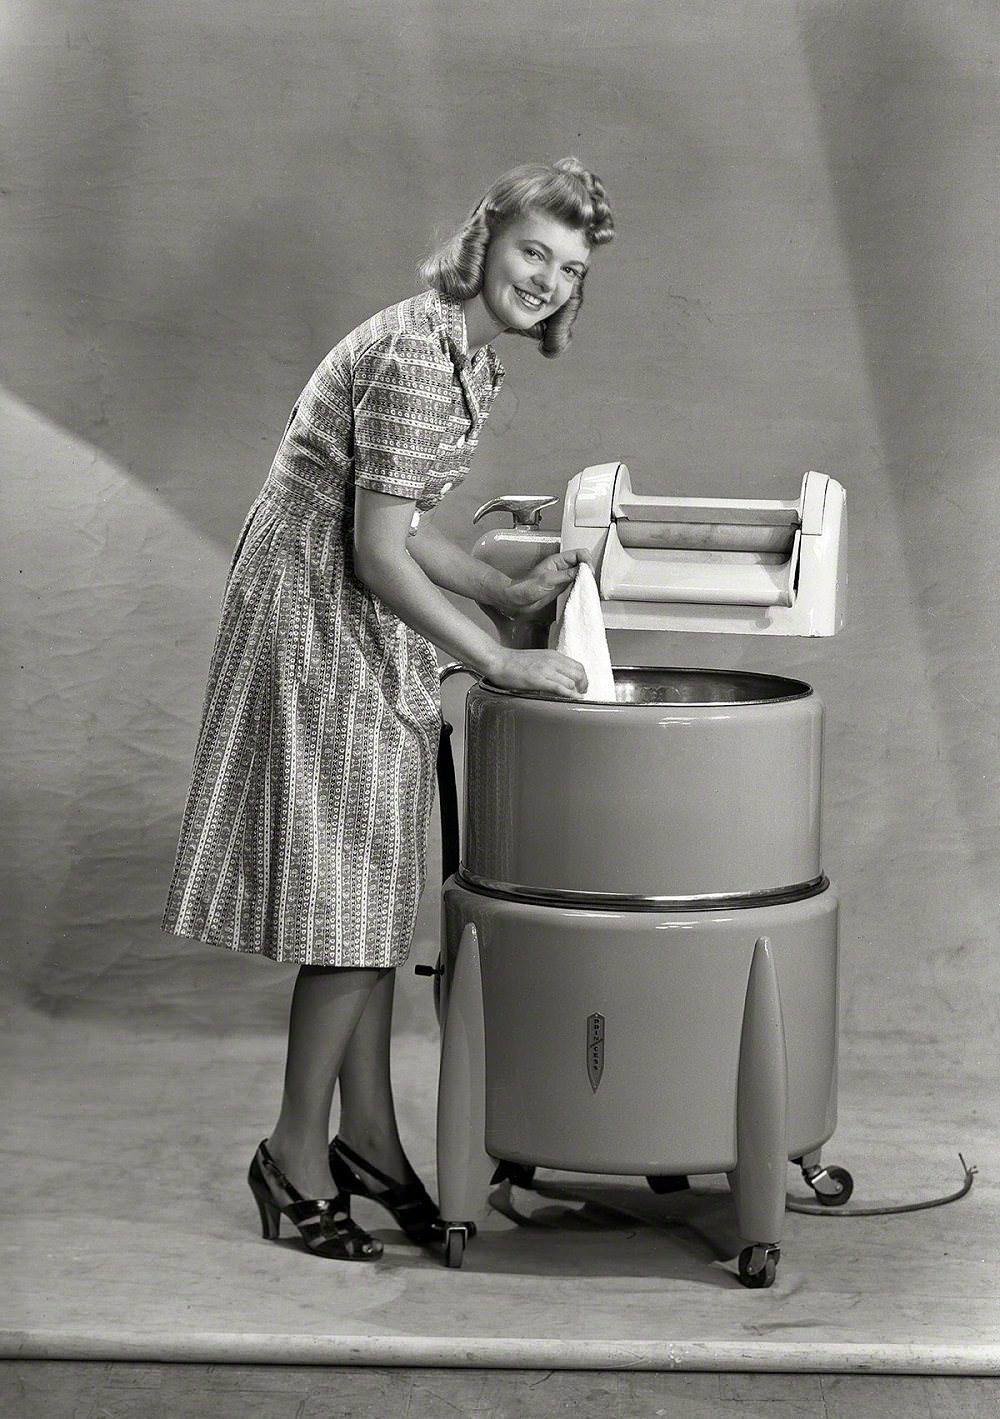 Model with wringer washing machine, New Zealand circa 1950s